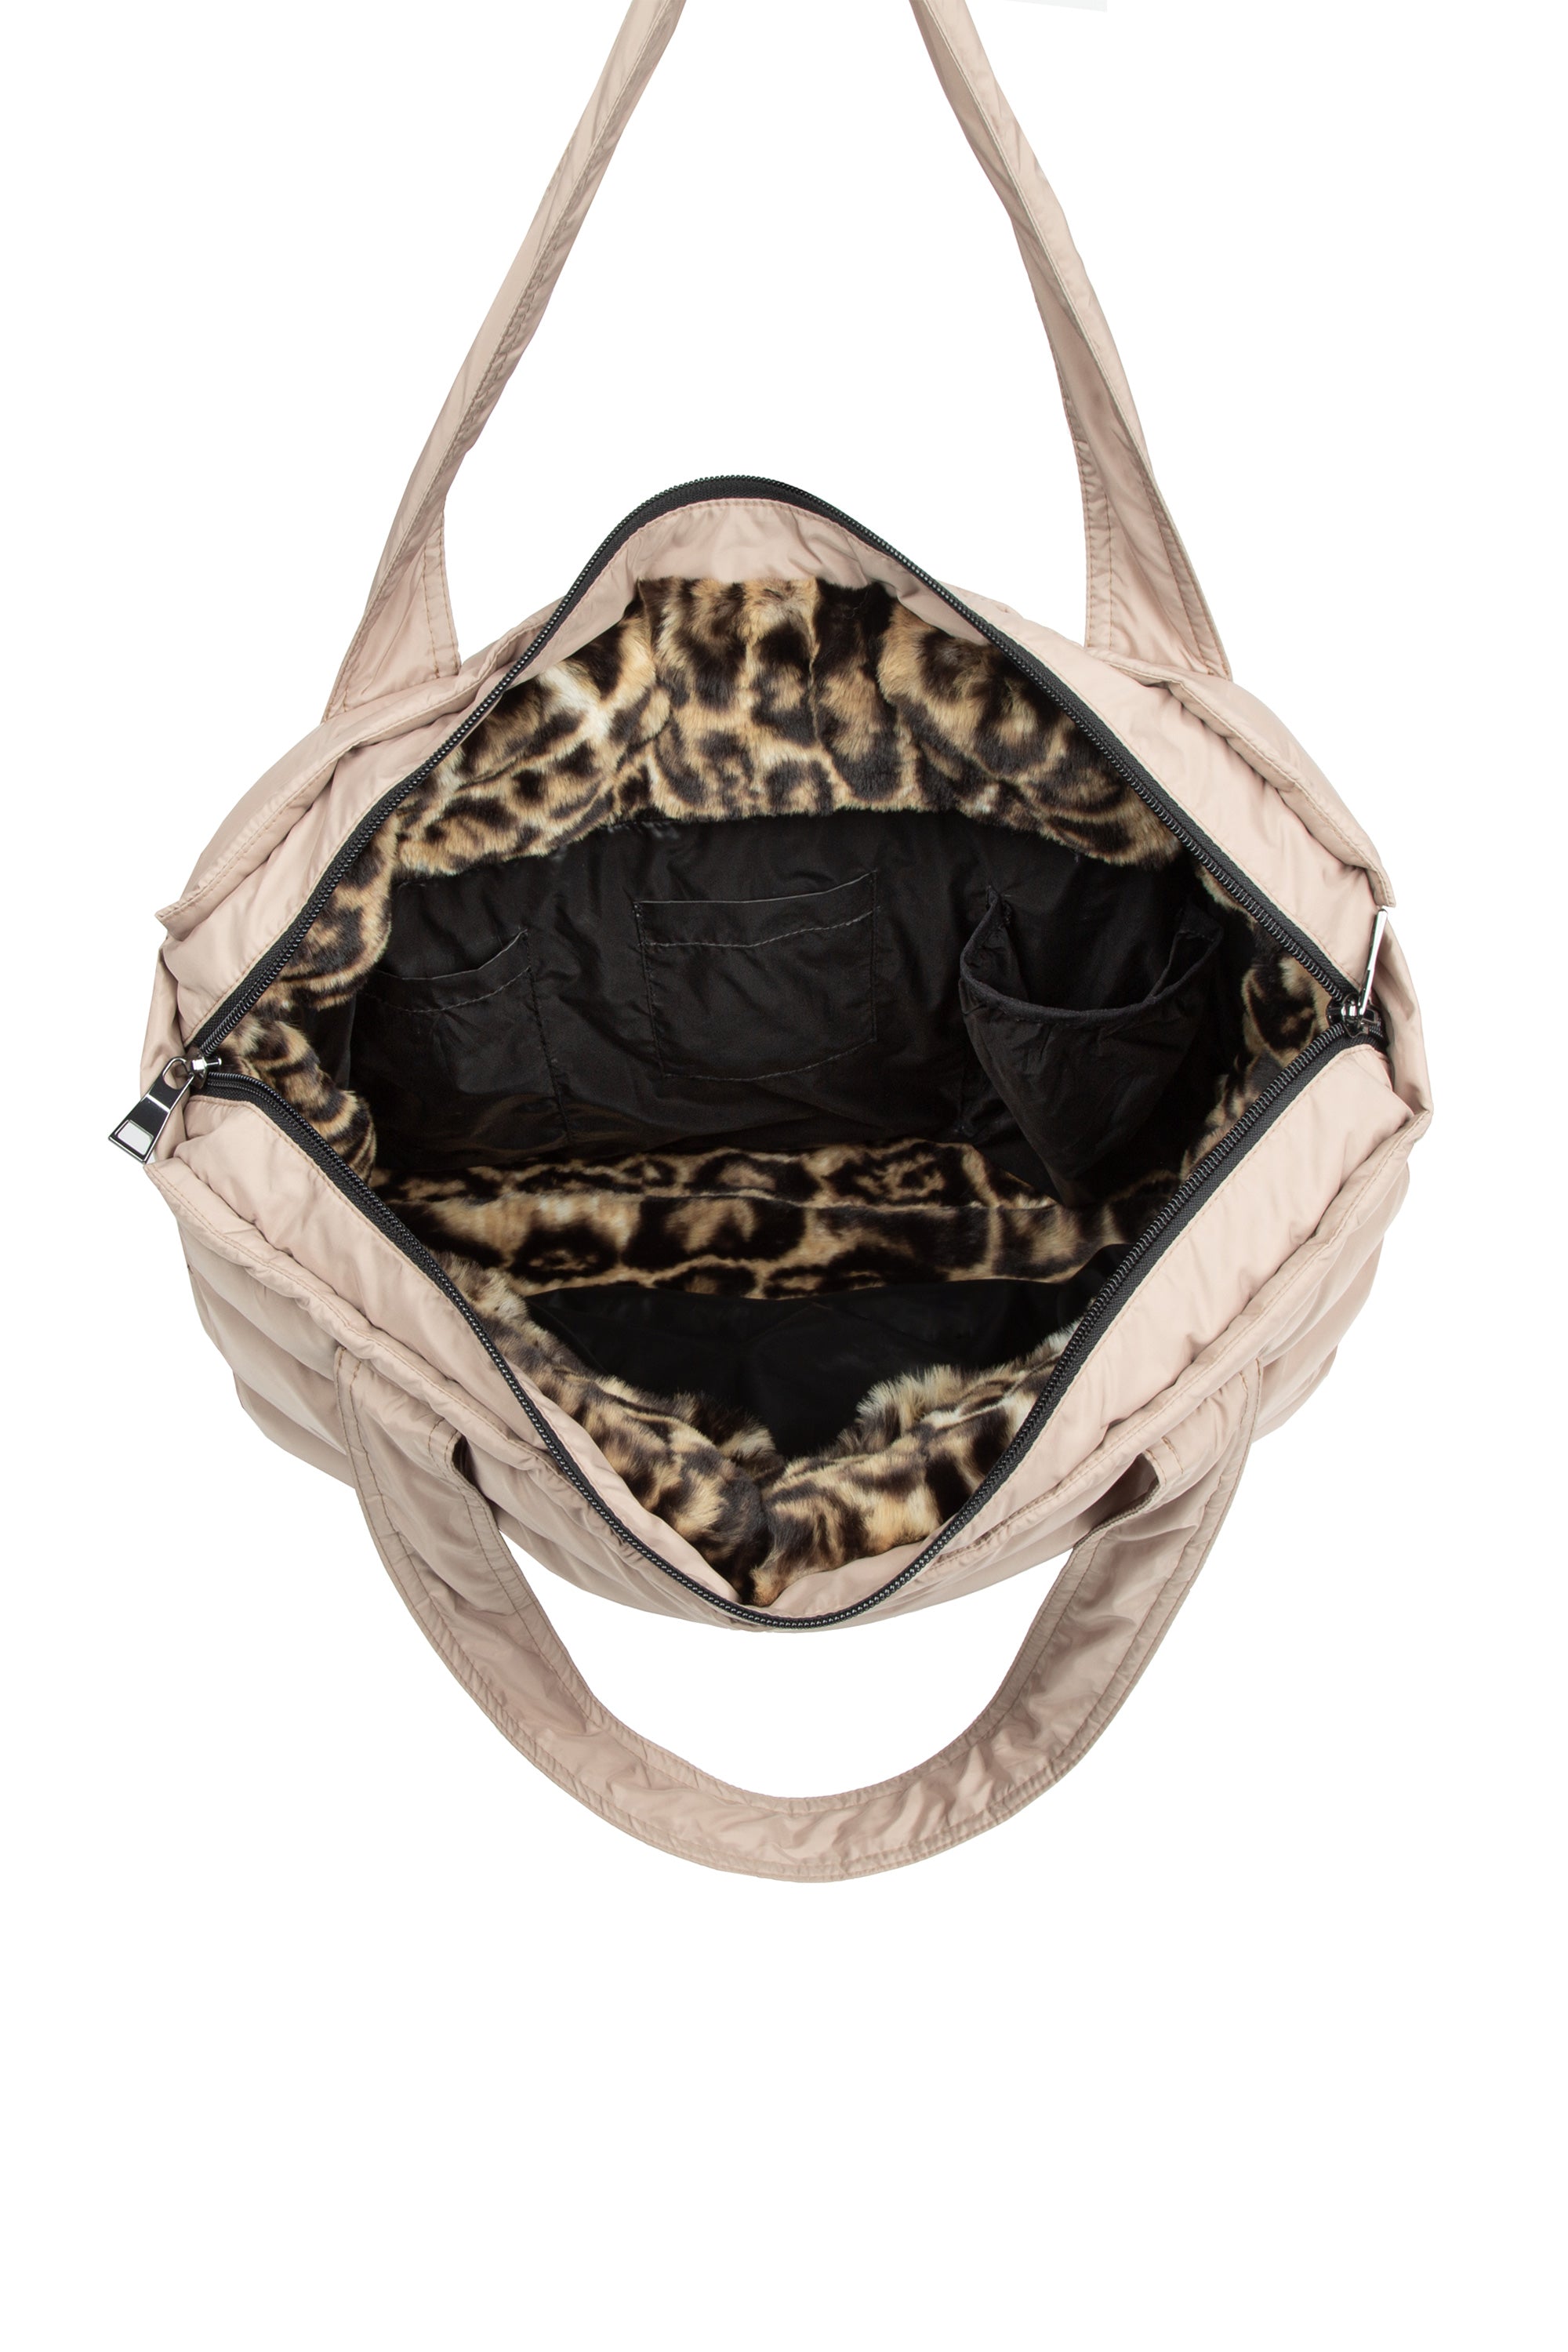 Large Size Hobo Tote Bag Faux Fur Brown Cheetah Leopard -  Canada